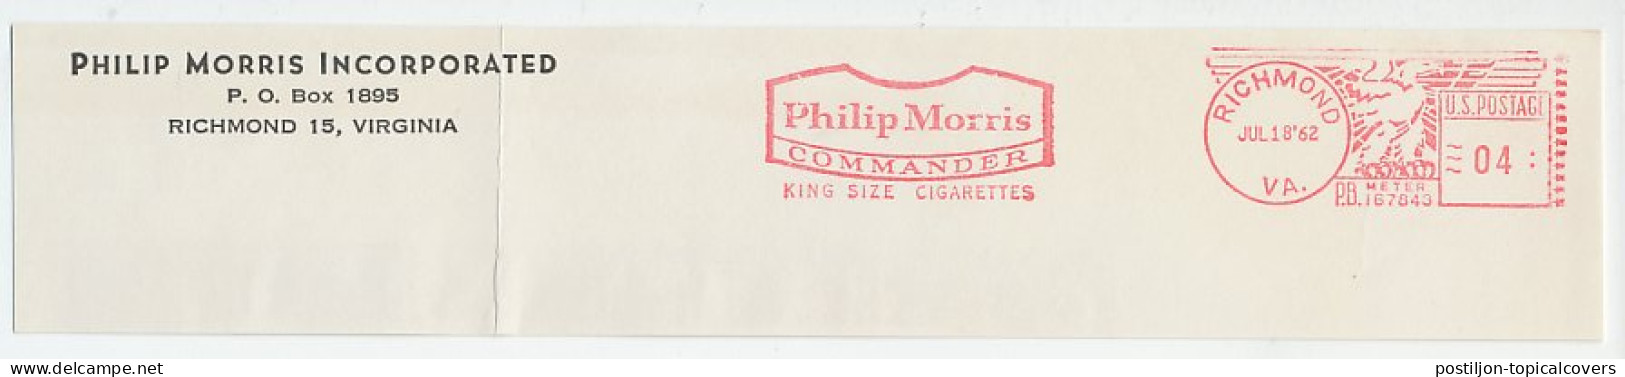 Meter Top Cut USA 1962 Cigarette - Philip Morris - Tobacco